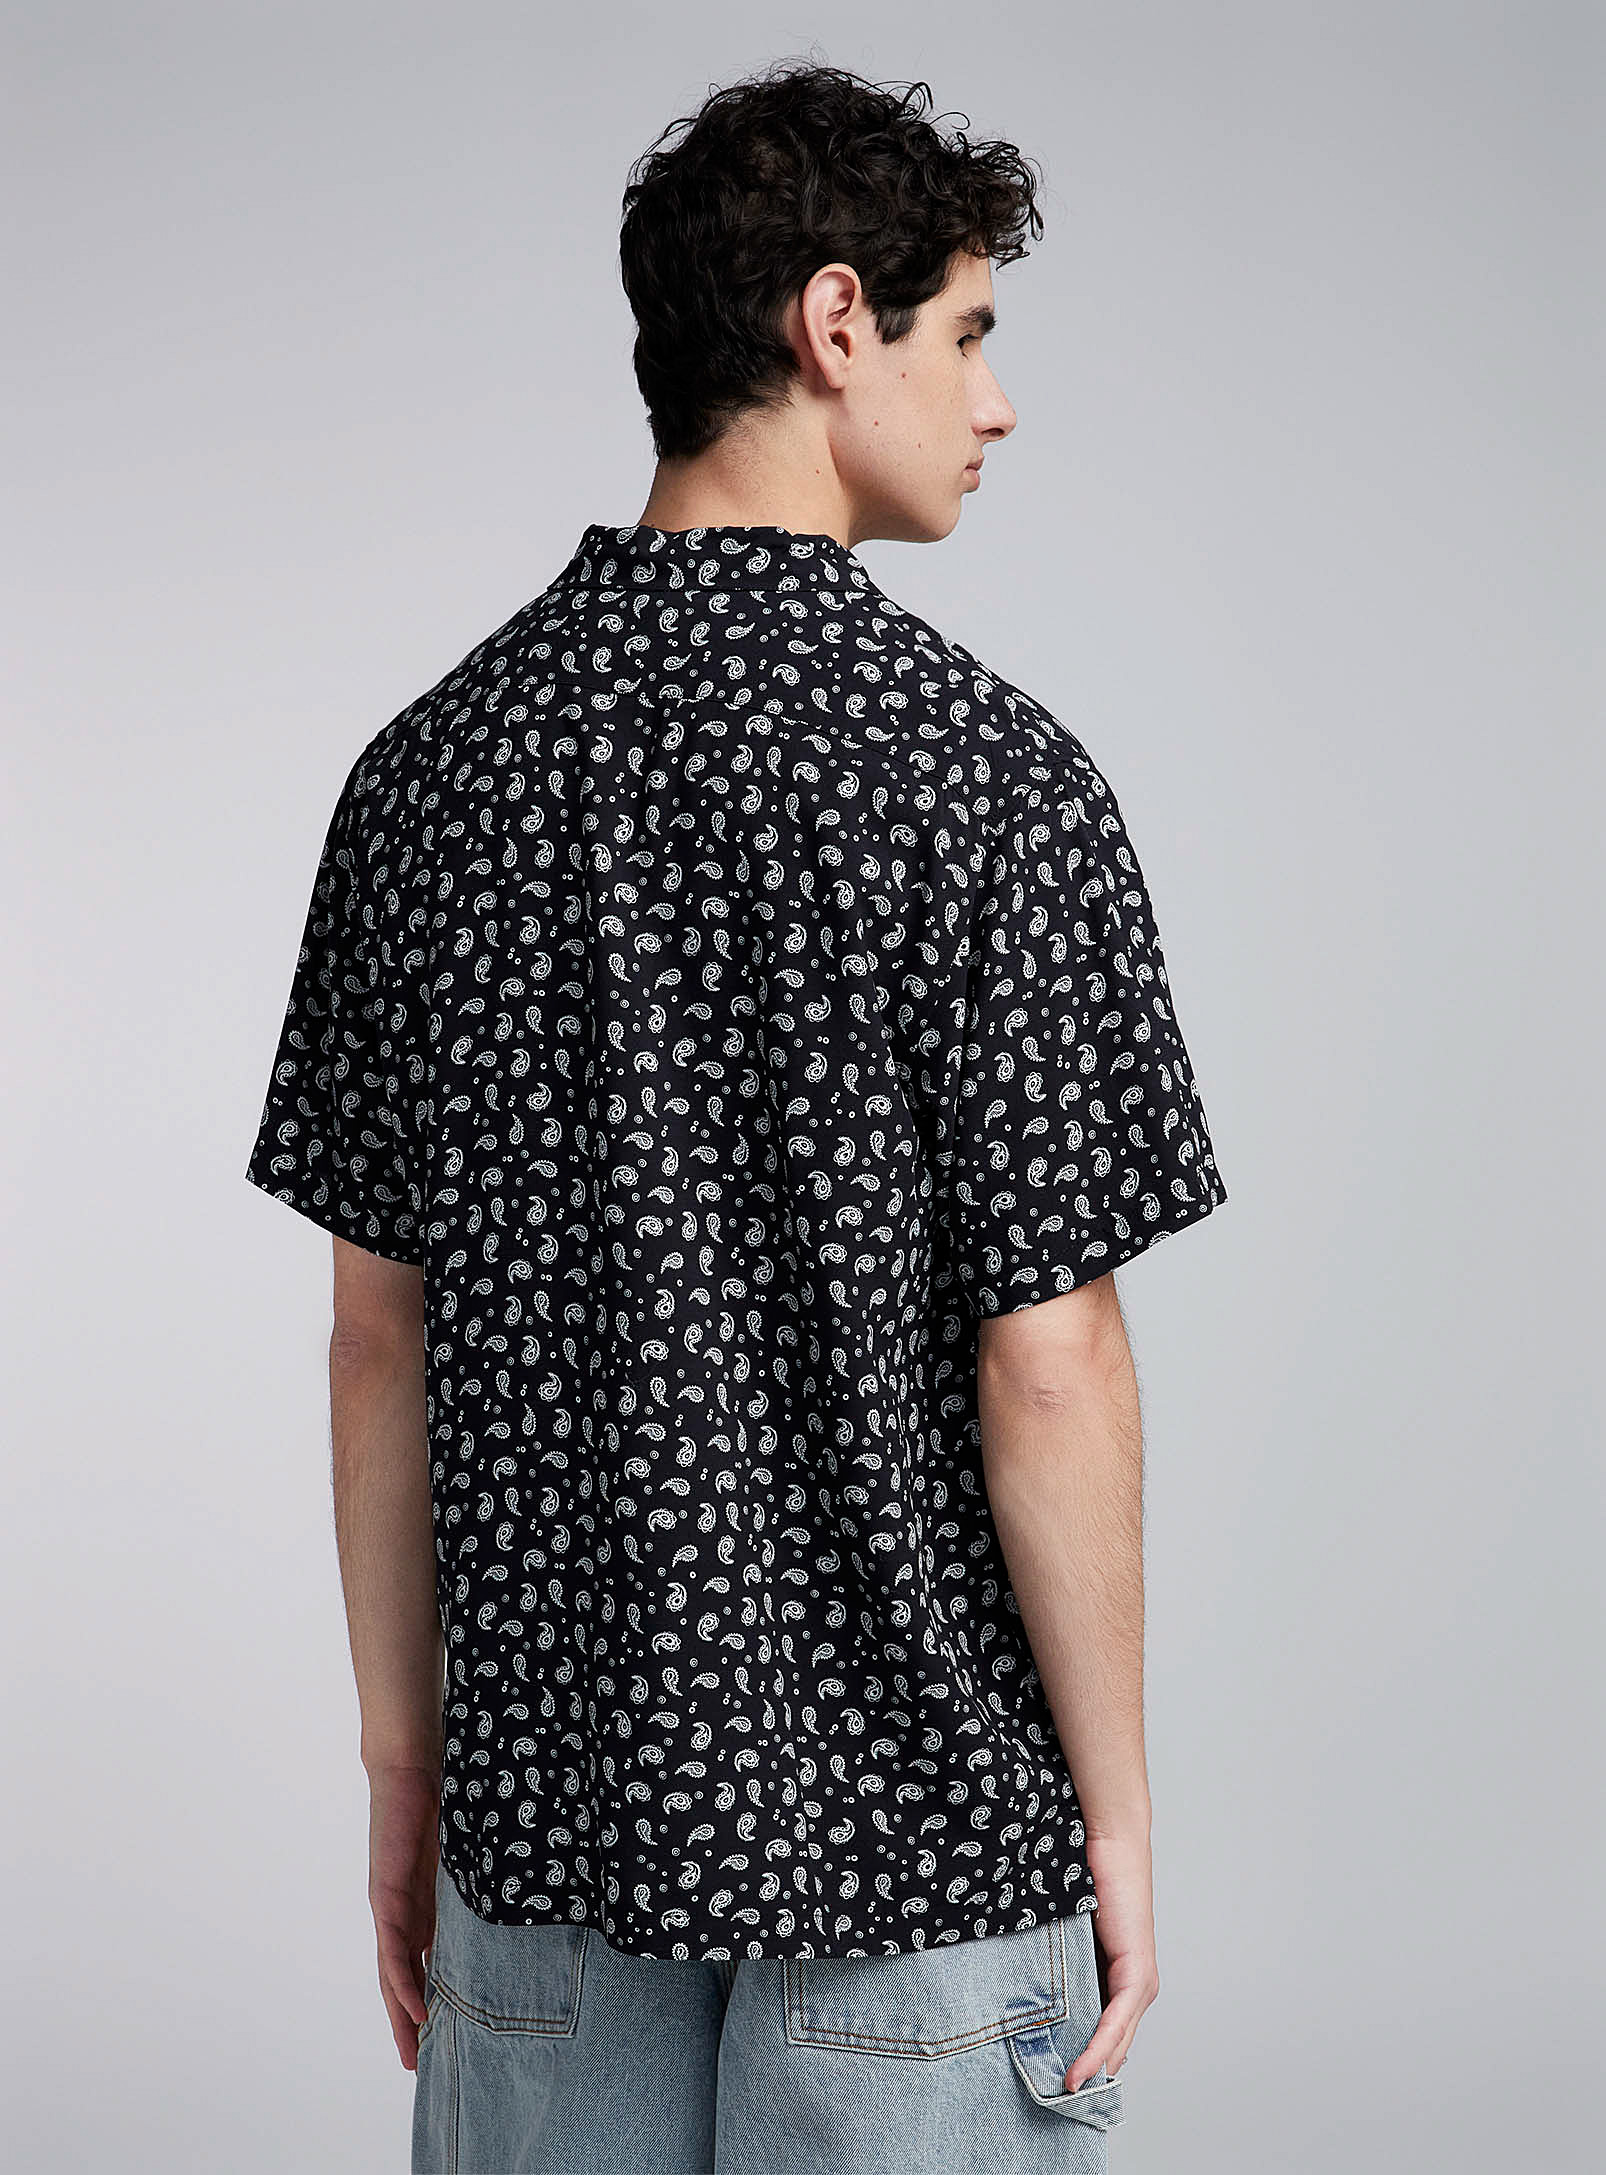 Noon Goons - La chemise motif paisley